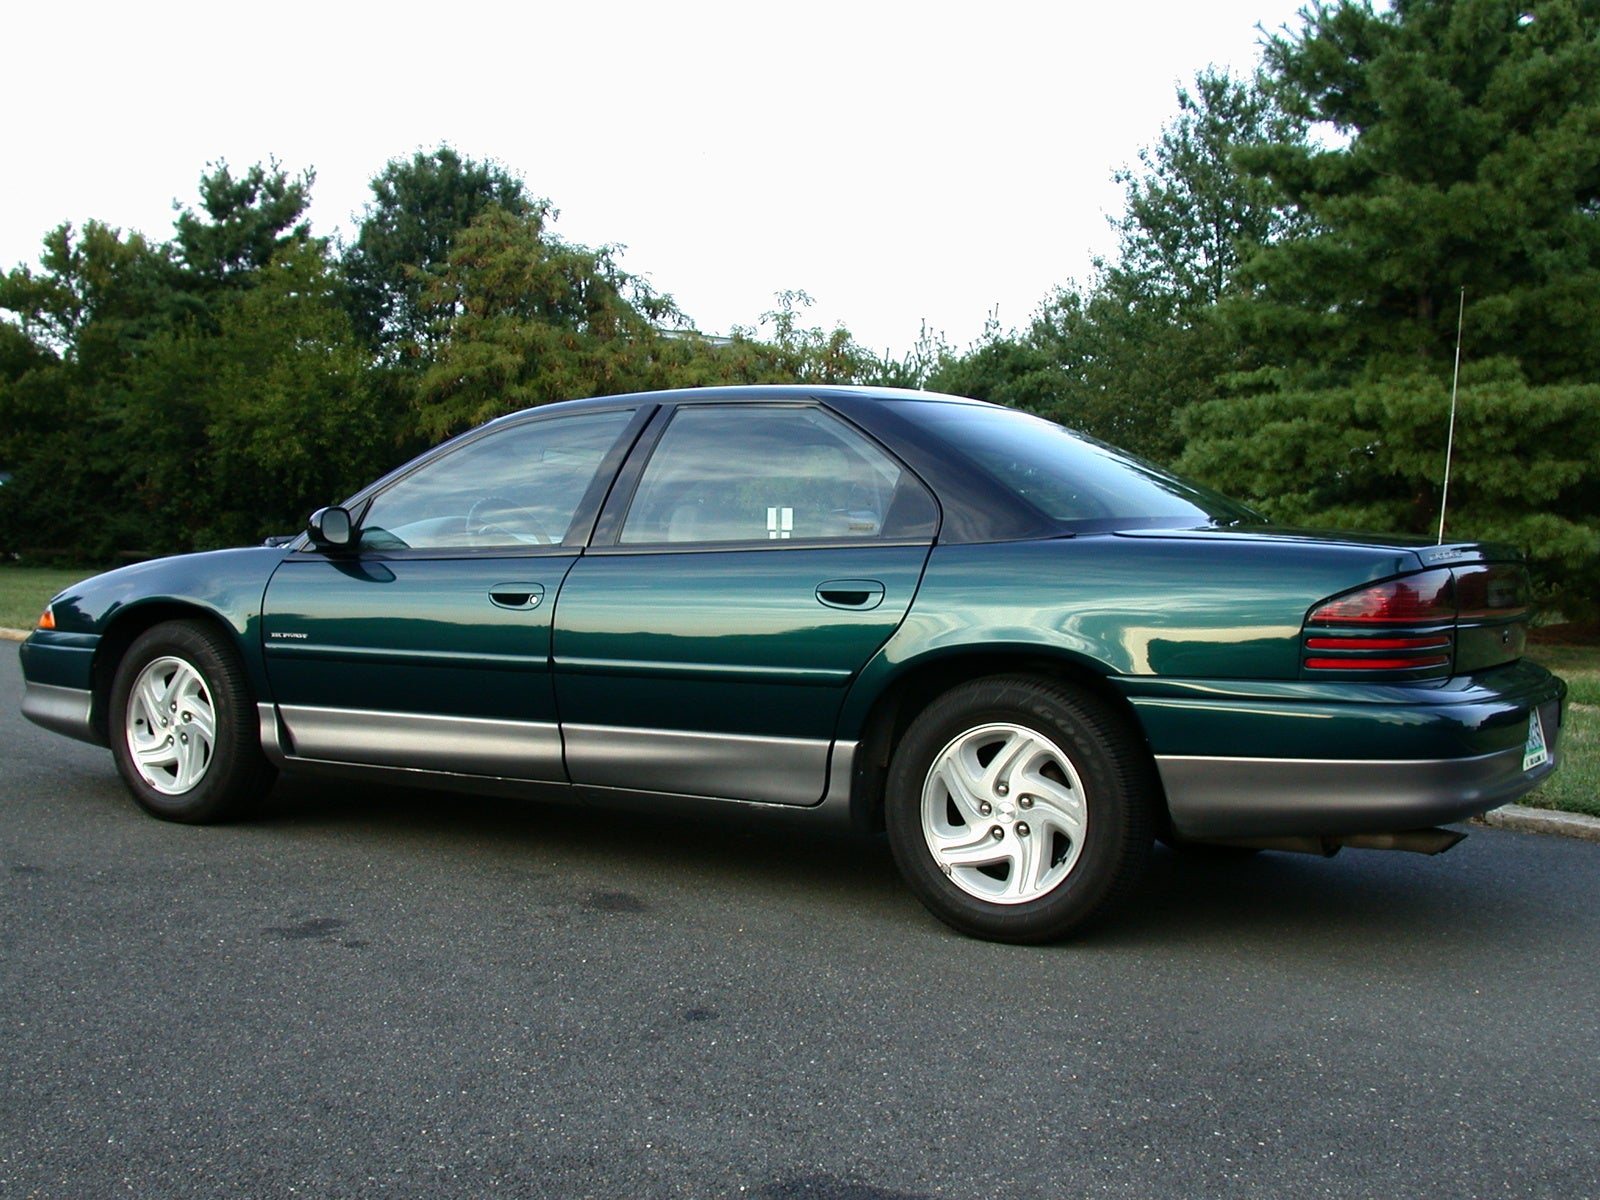 1995 Chrysler intrepid es #4